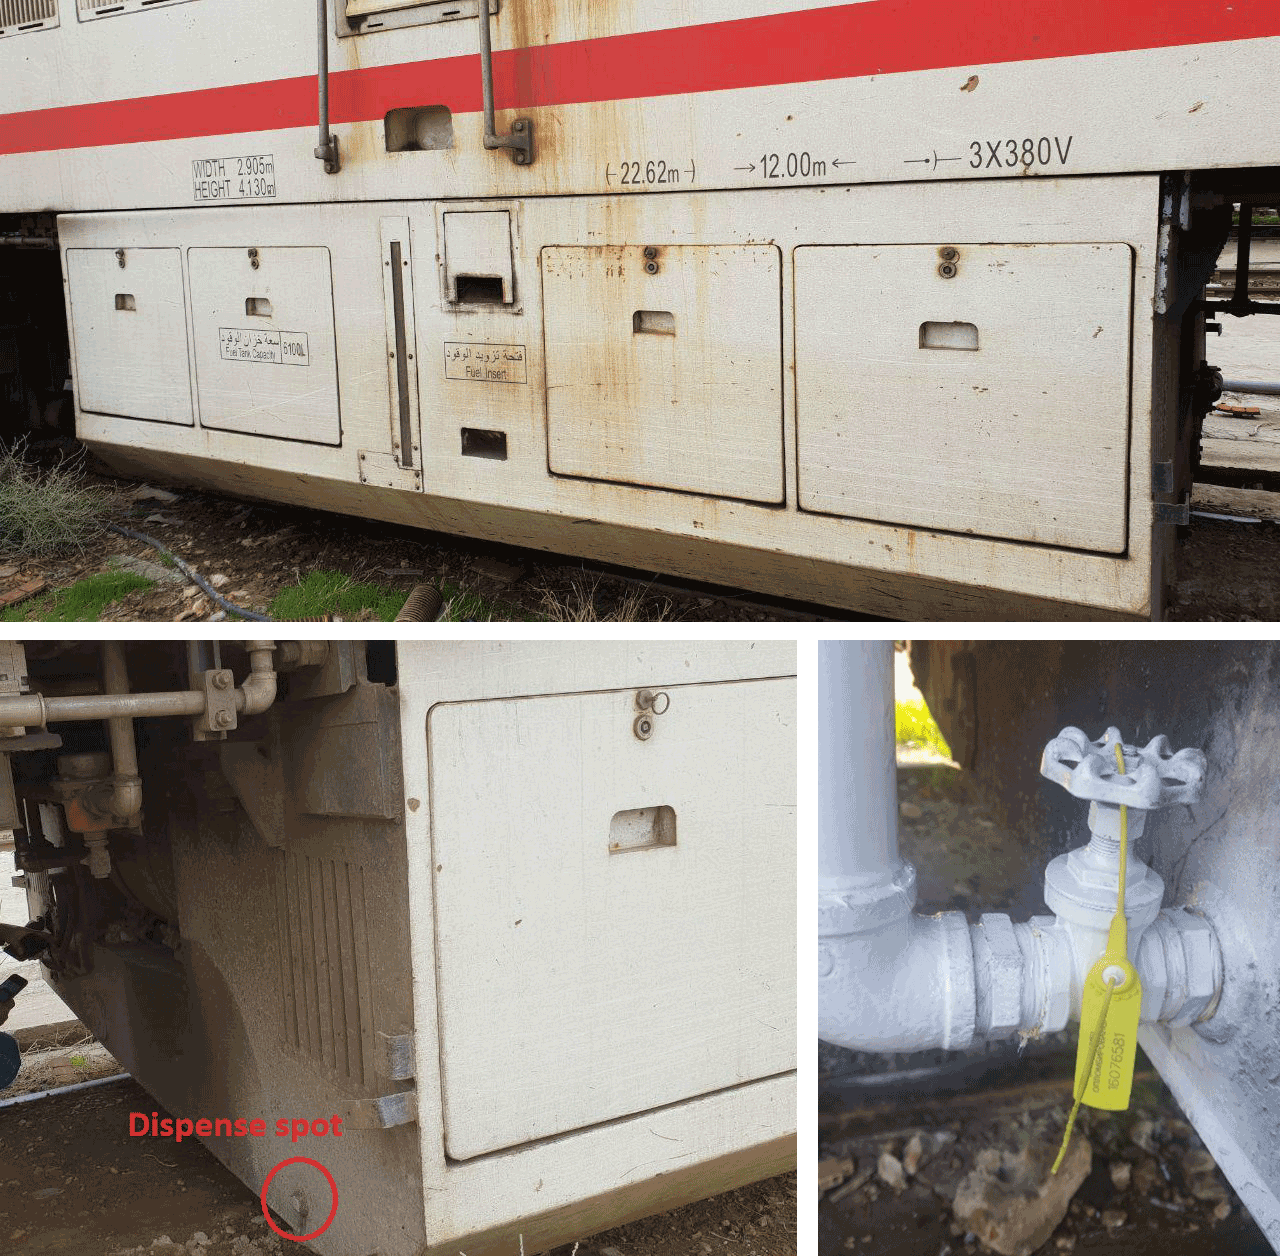 Installing a fuel level sensor on a train locomotive